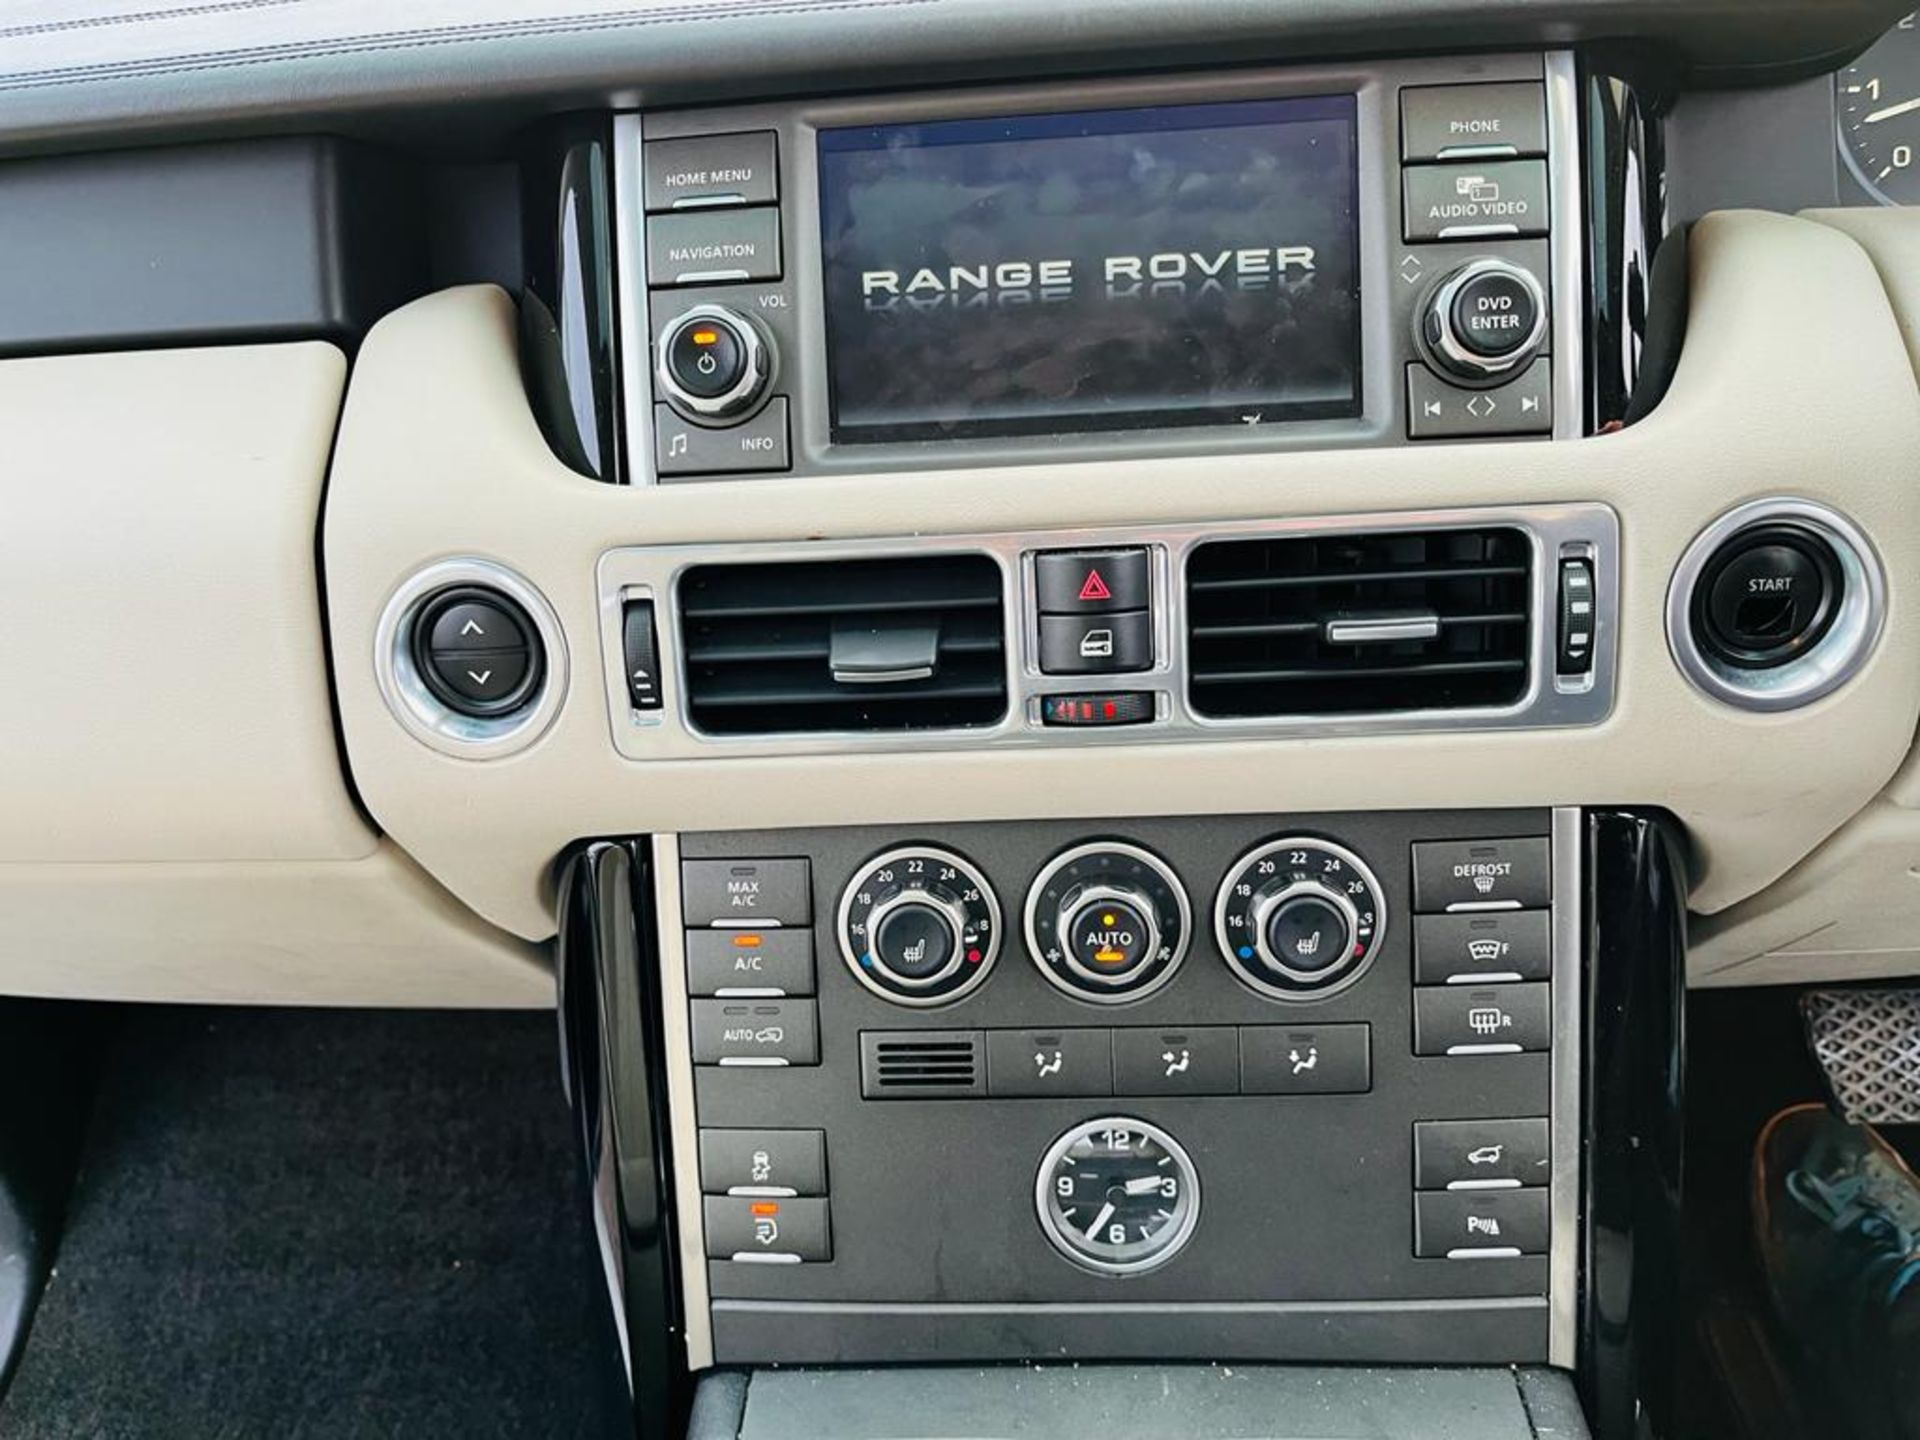 ** ON SALE ** Land Rover Range Rover Vogue 4.4 TDV8 Auto 2011 '11 Reg' - Sat Nav - A/C - 4WD - Image 20 of 37